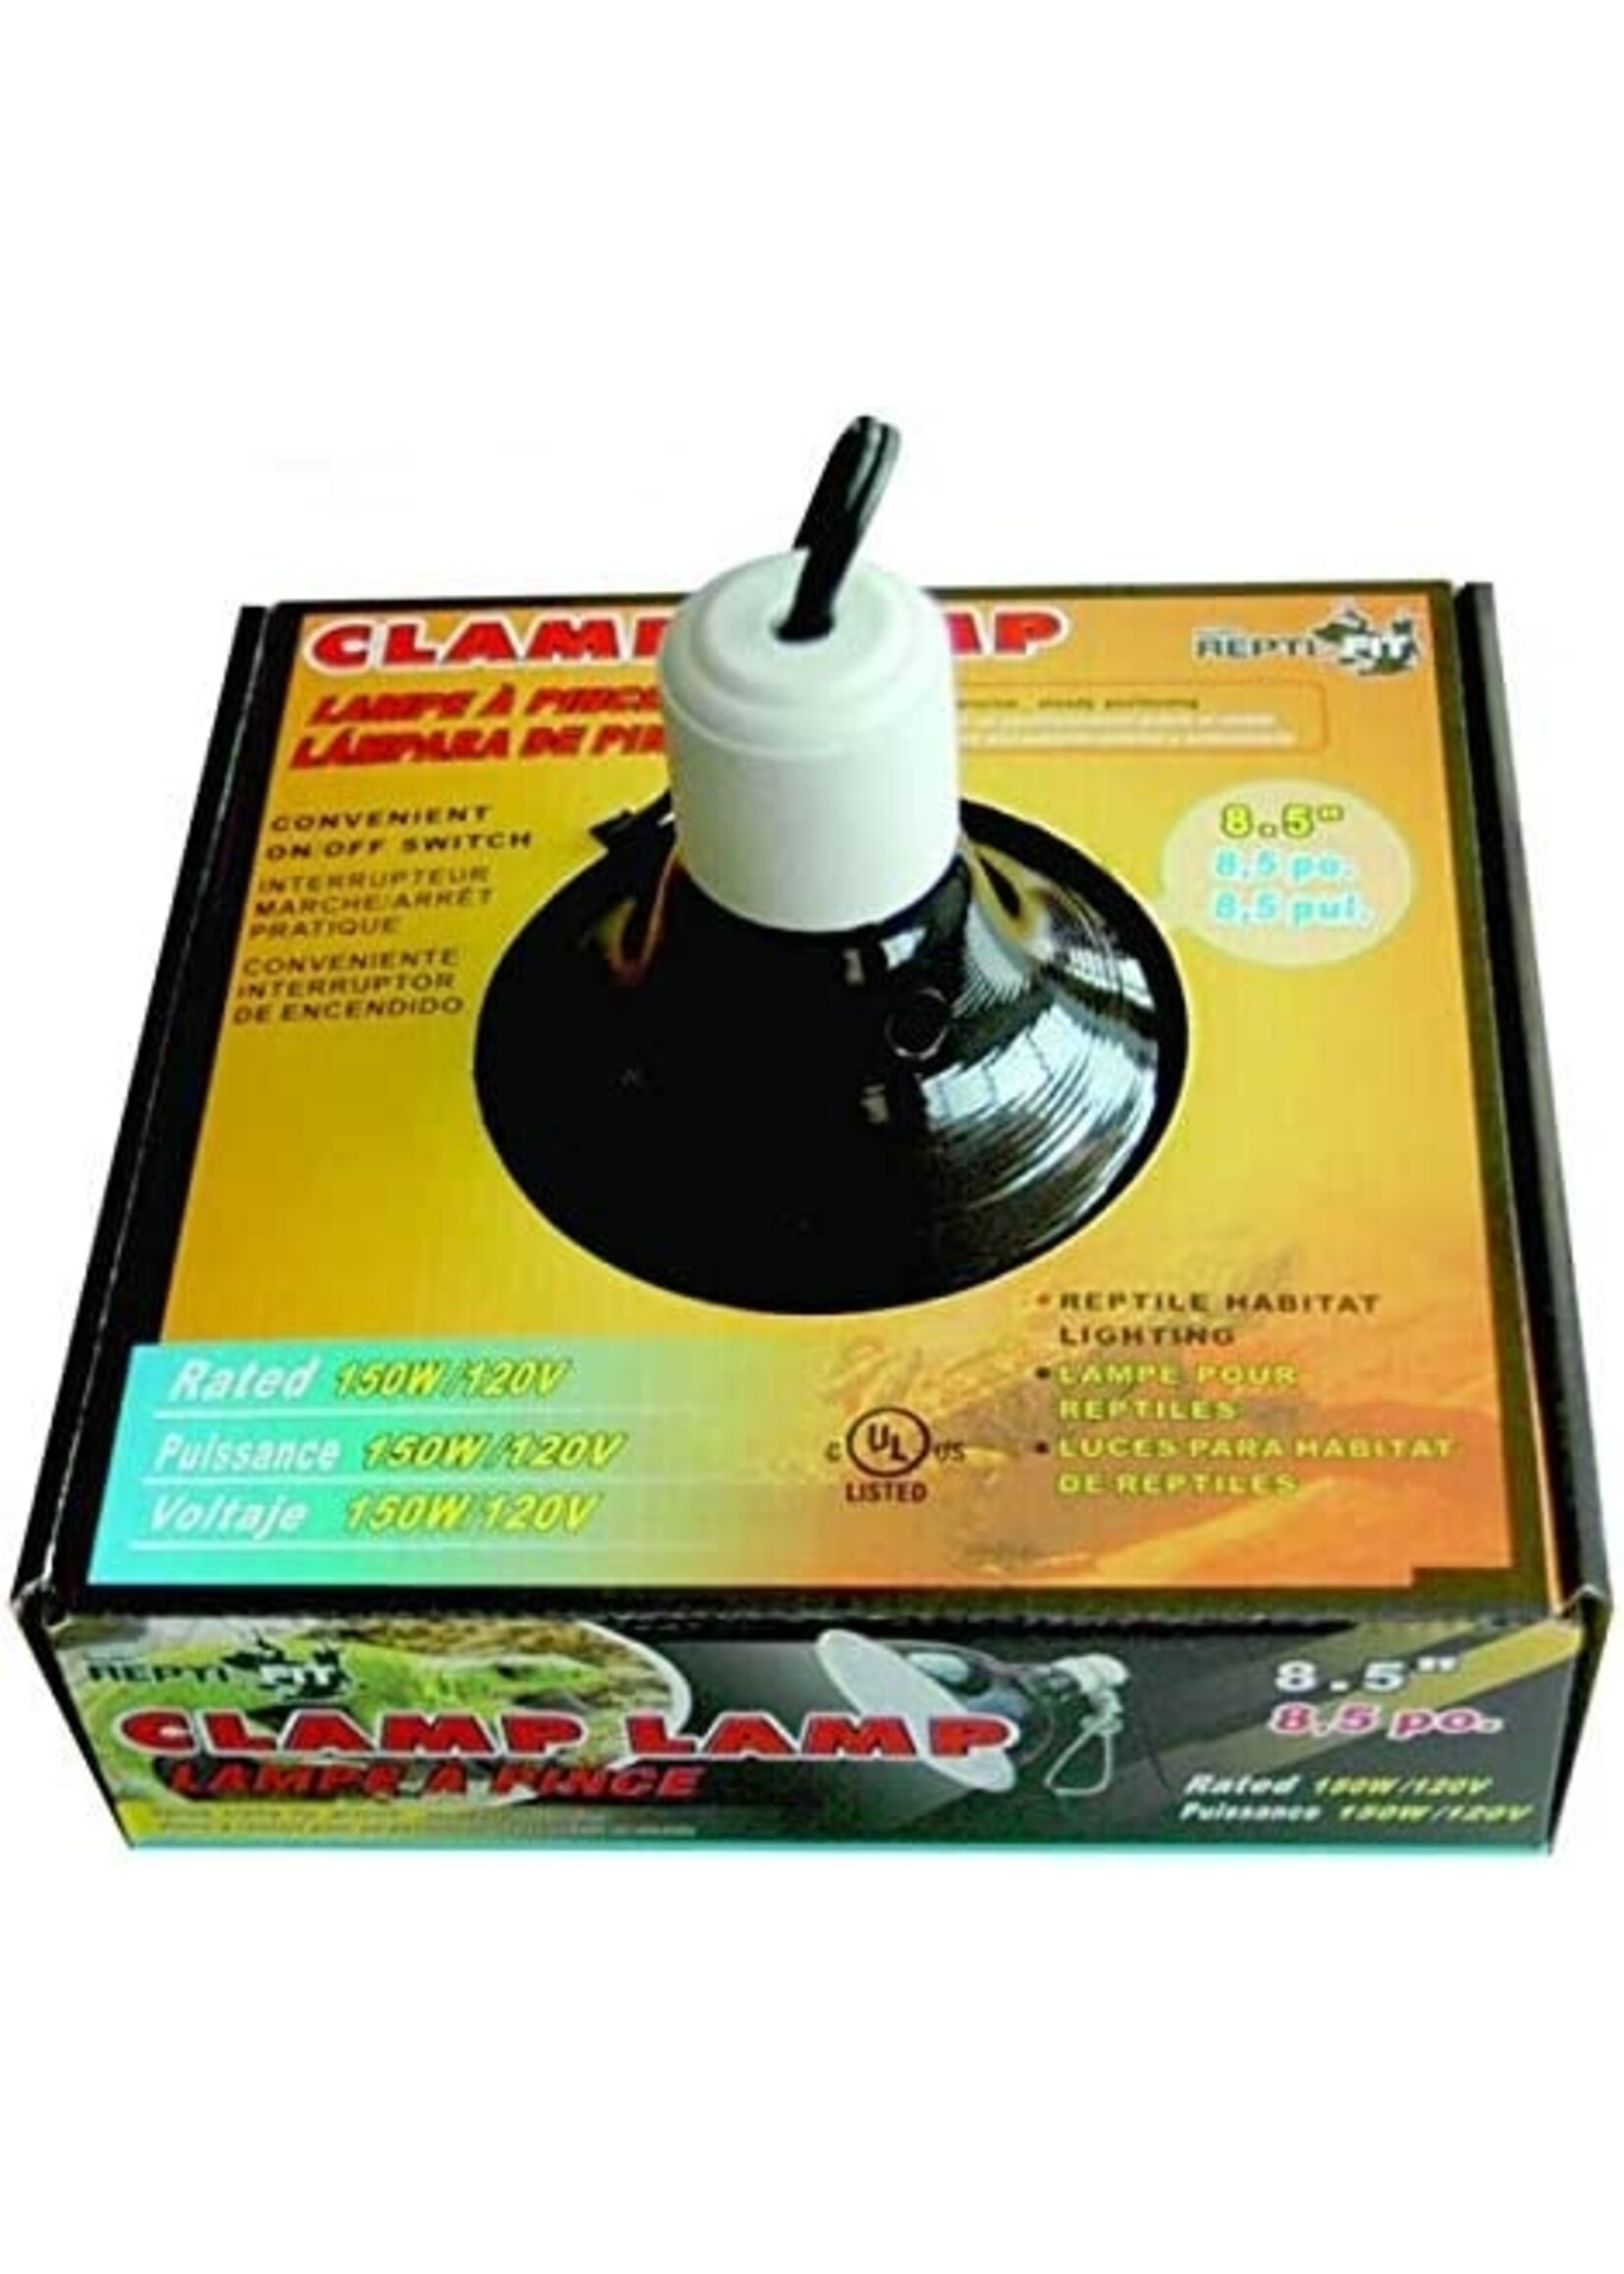 Repti-Fit Dome Clamp Lamp Black